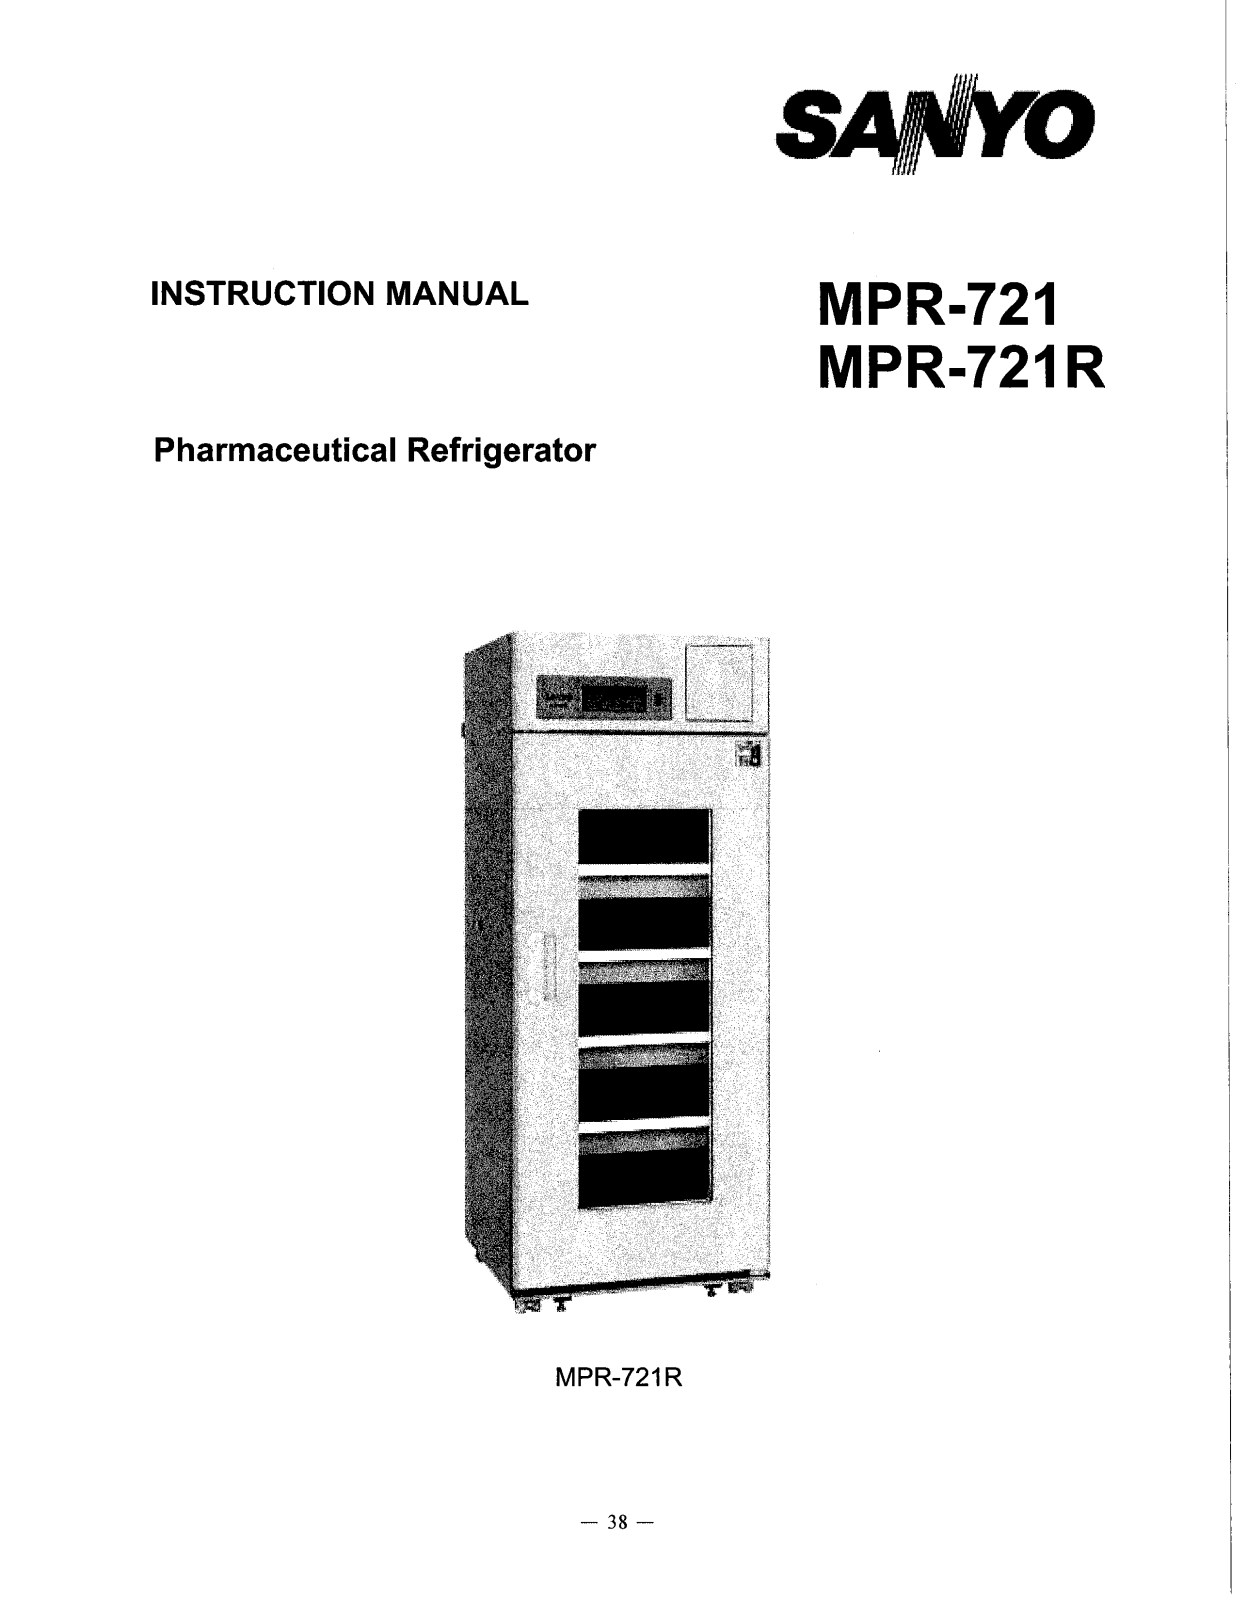 Sanyo MPR-721R, MPR-721 User Manual